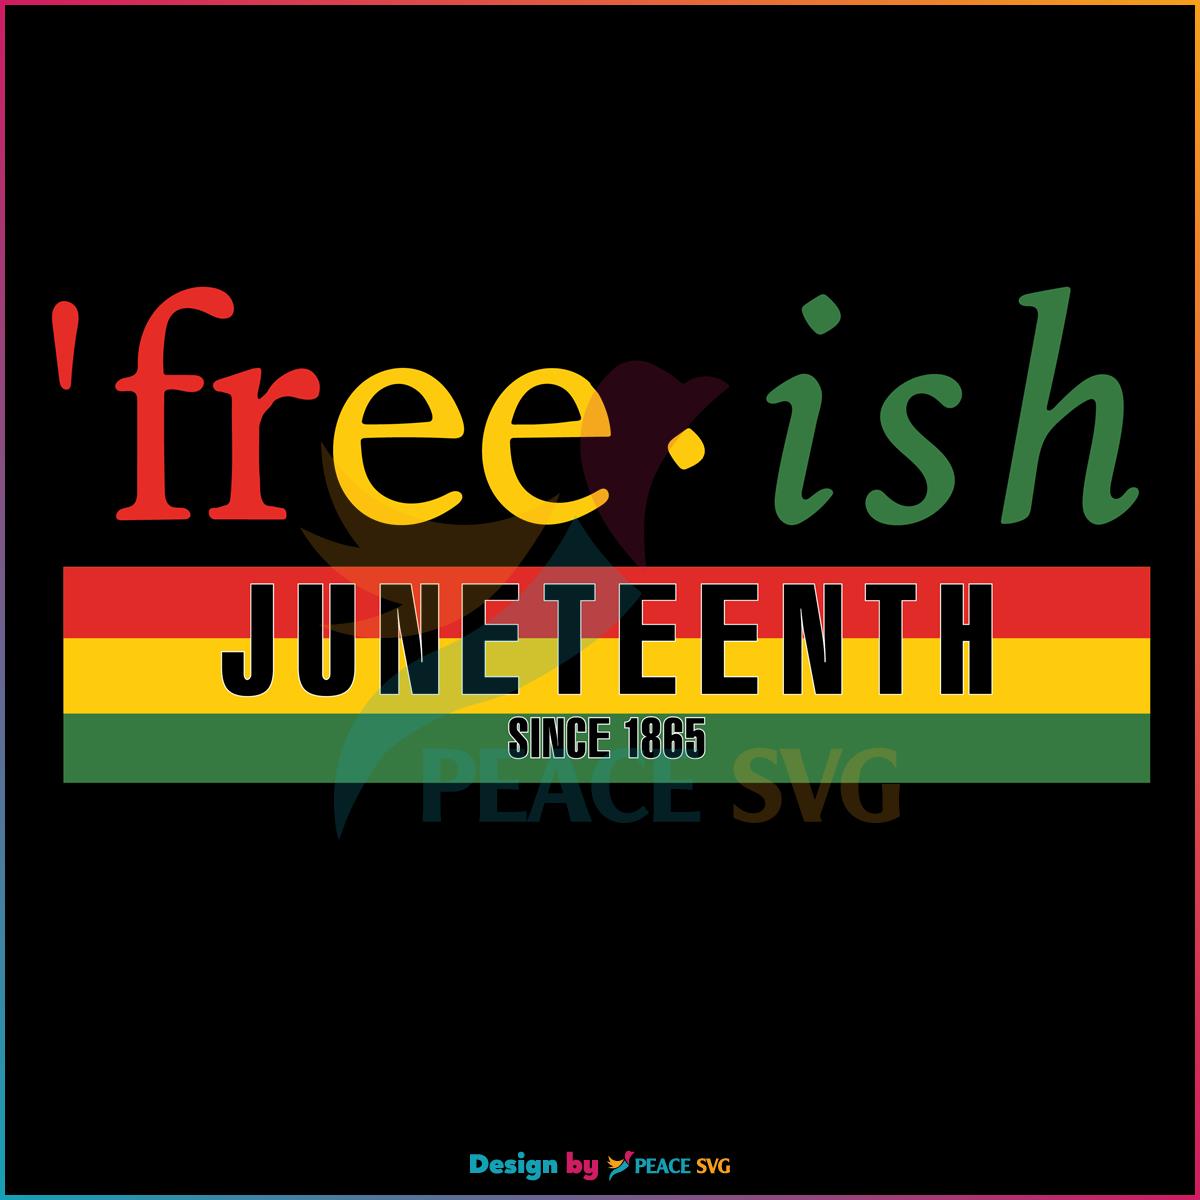 Freeish Juneteenth Since 1865 SVG